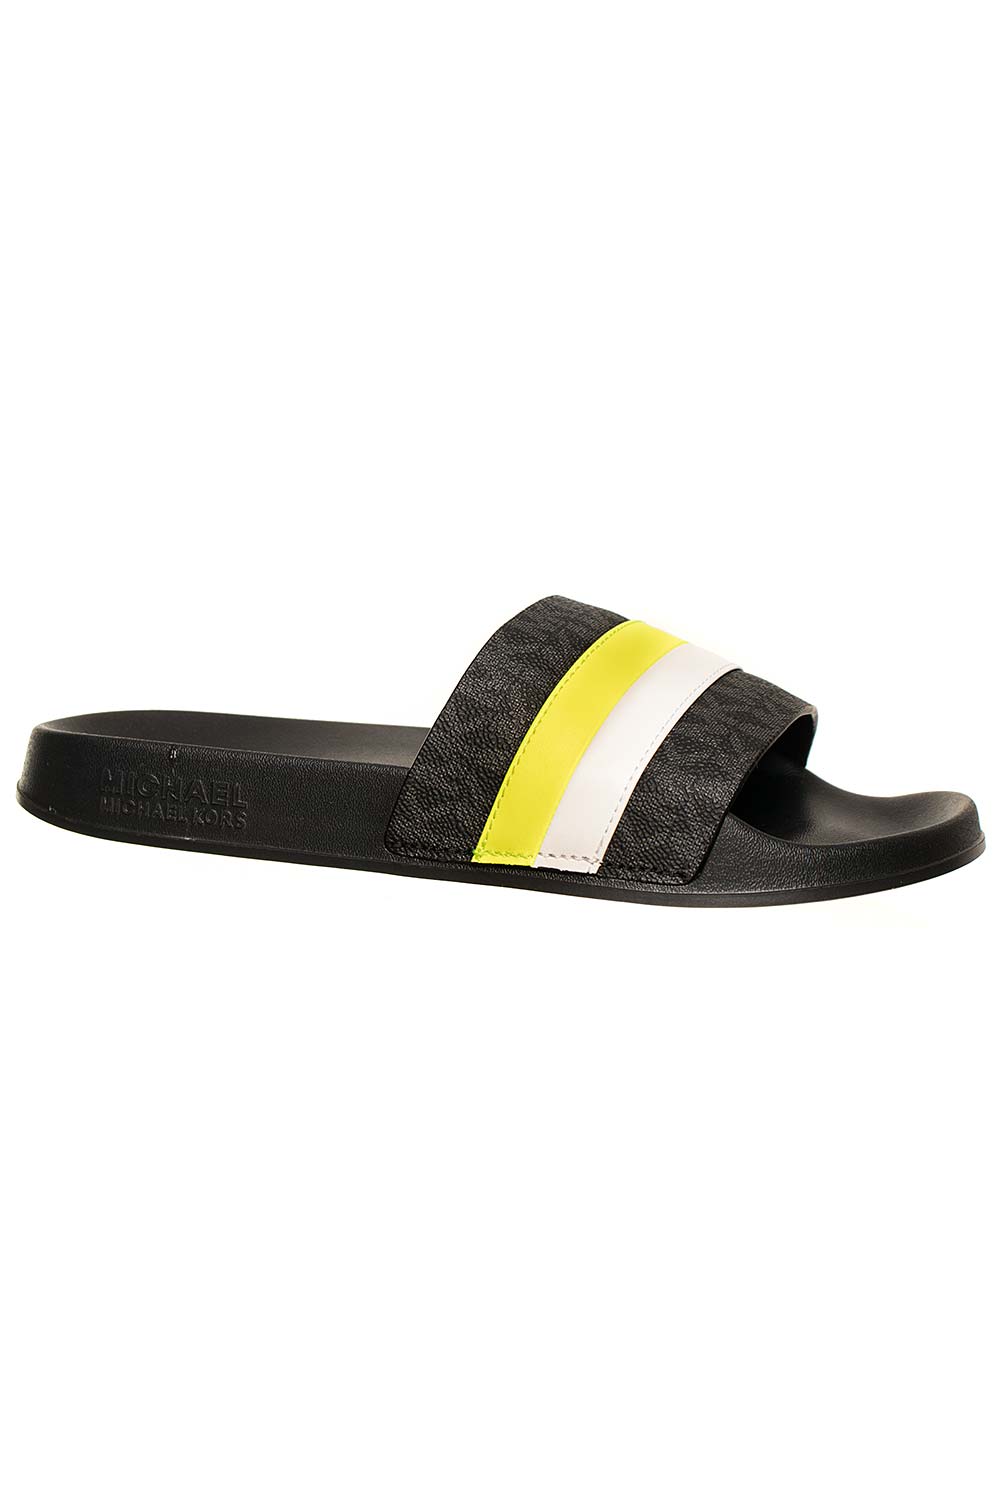 Michael Kors dámské pantofle černé s neon žlutou Velikost: EU 38,5